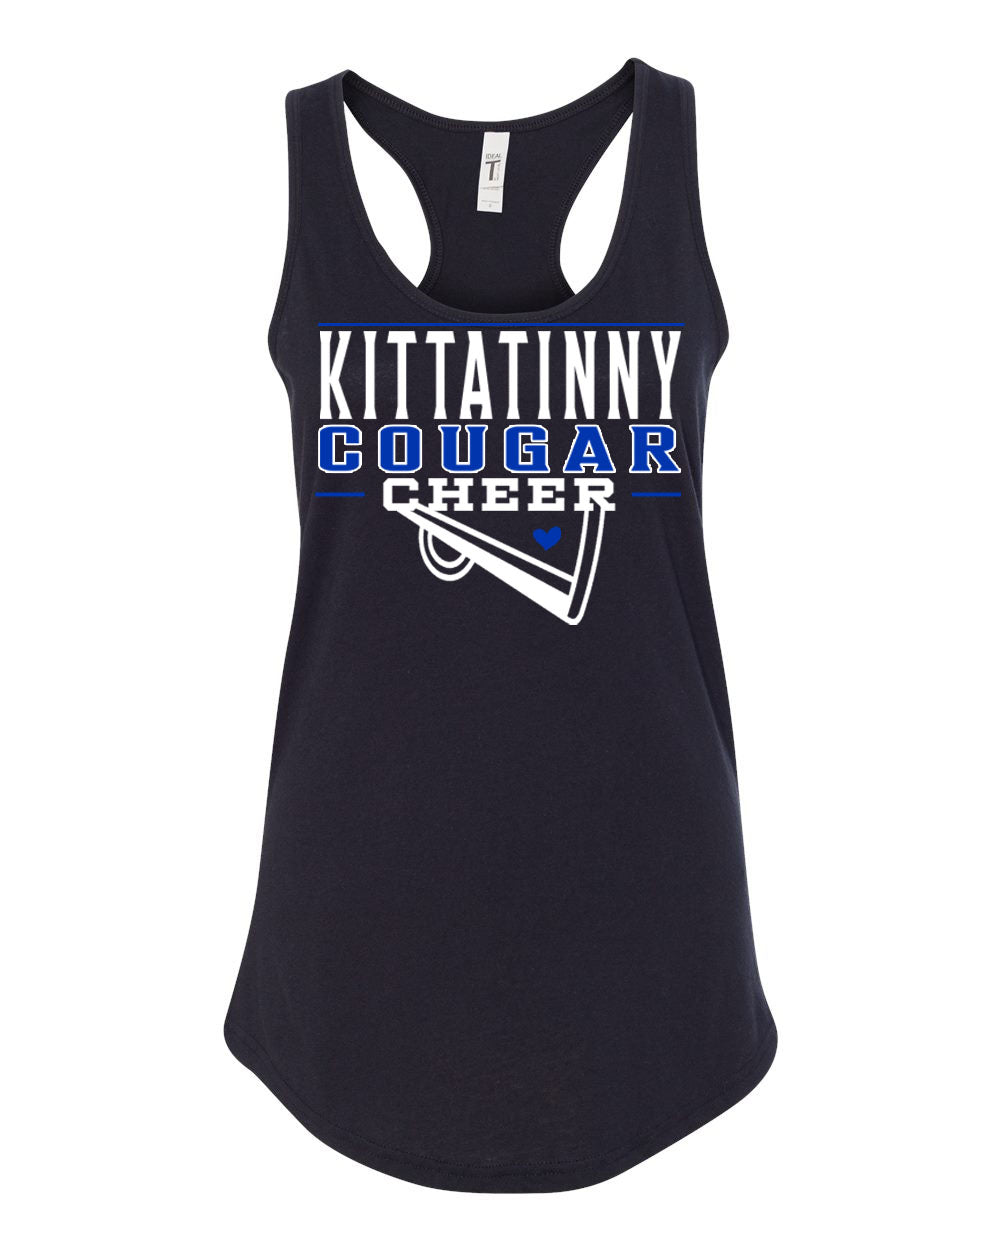 Kittatinny Cheer Design 11 Tank Top